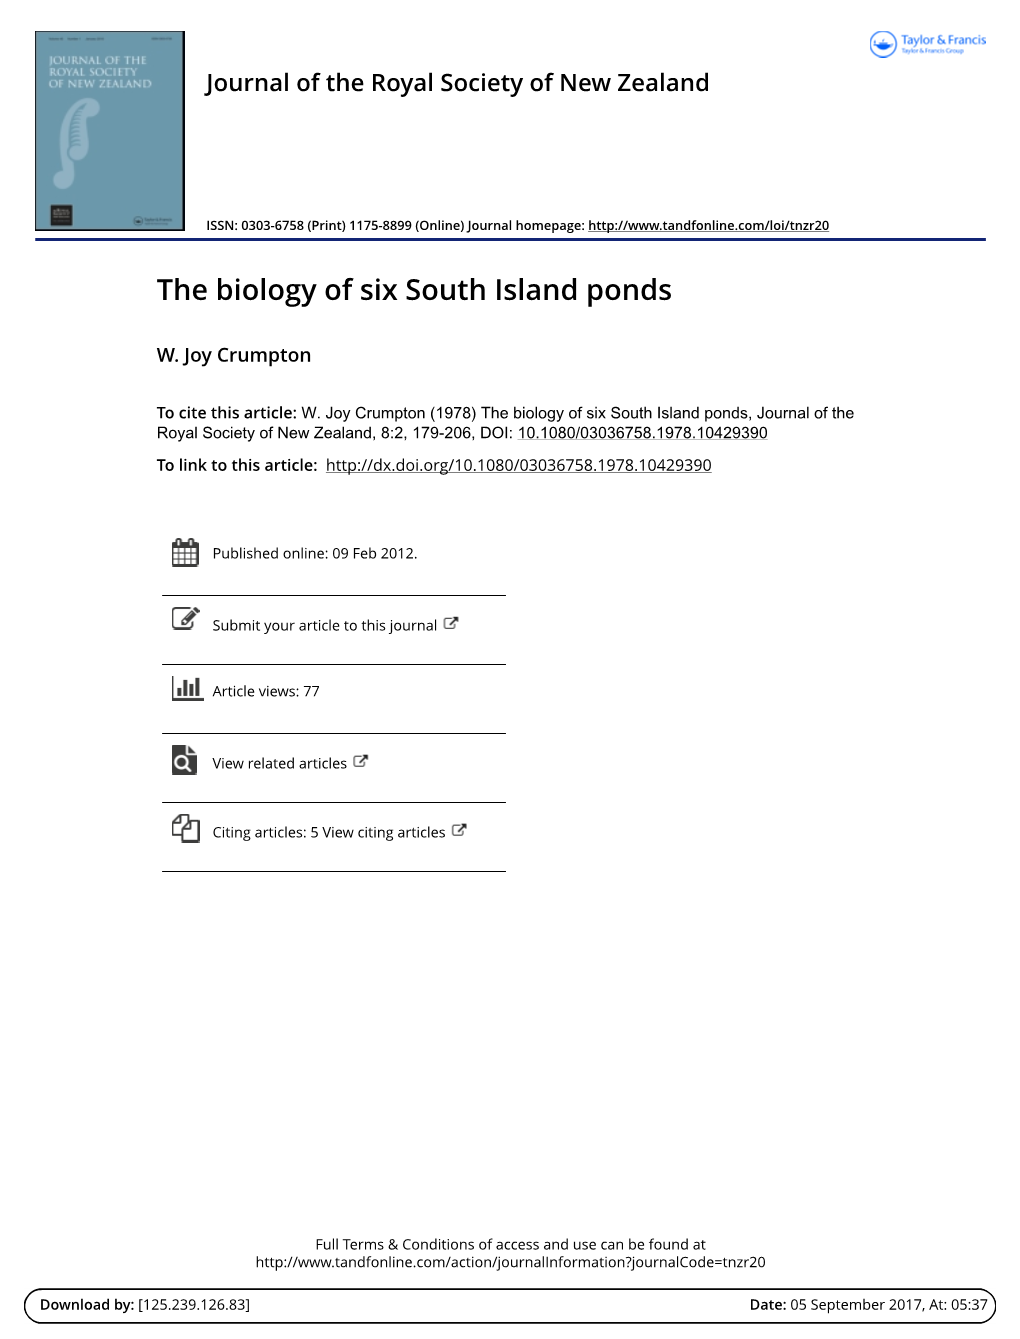 The Biology of Six South Island Ponds